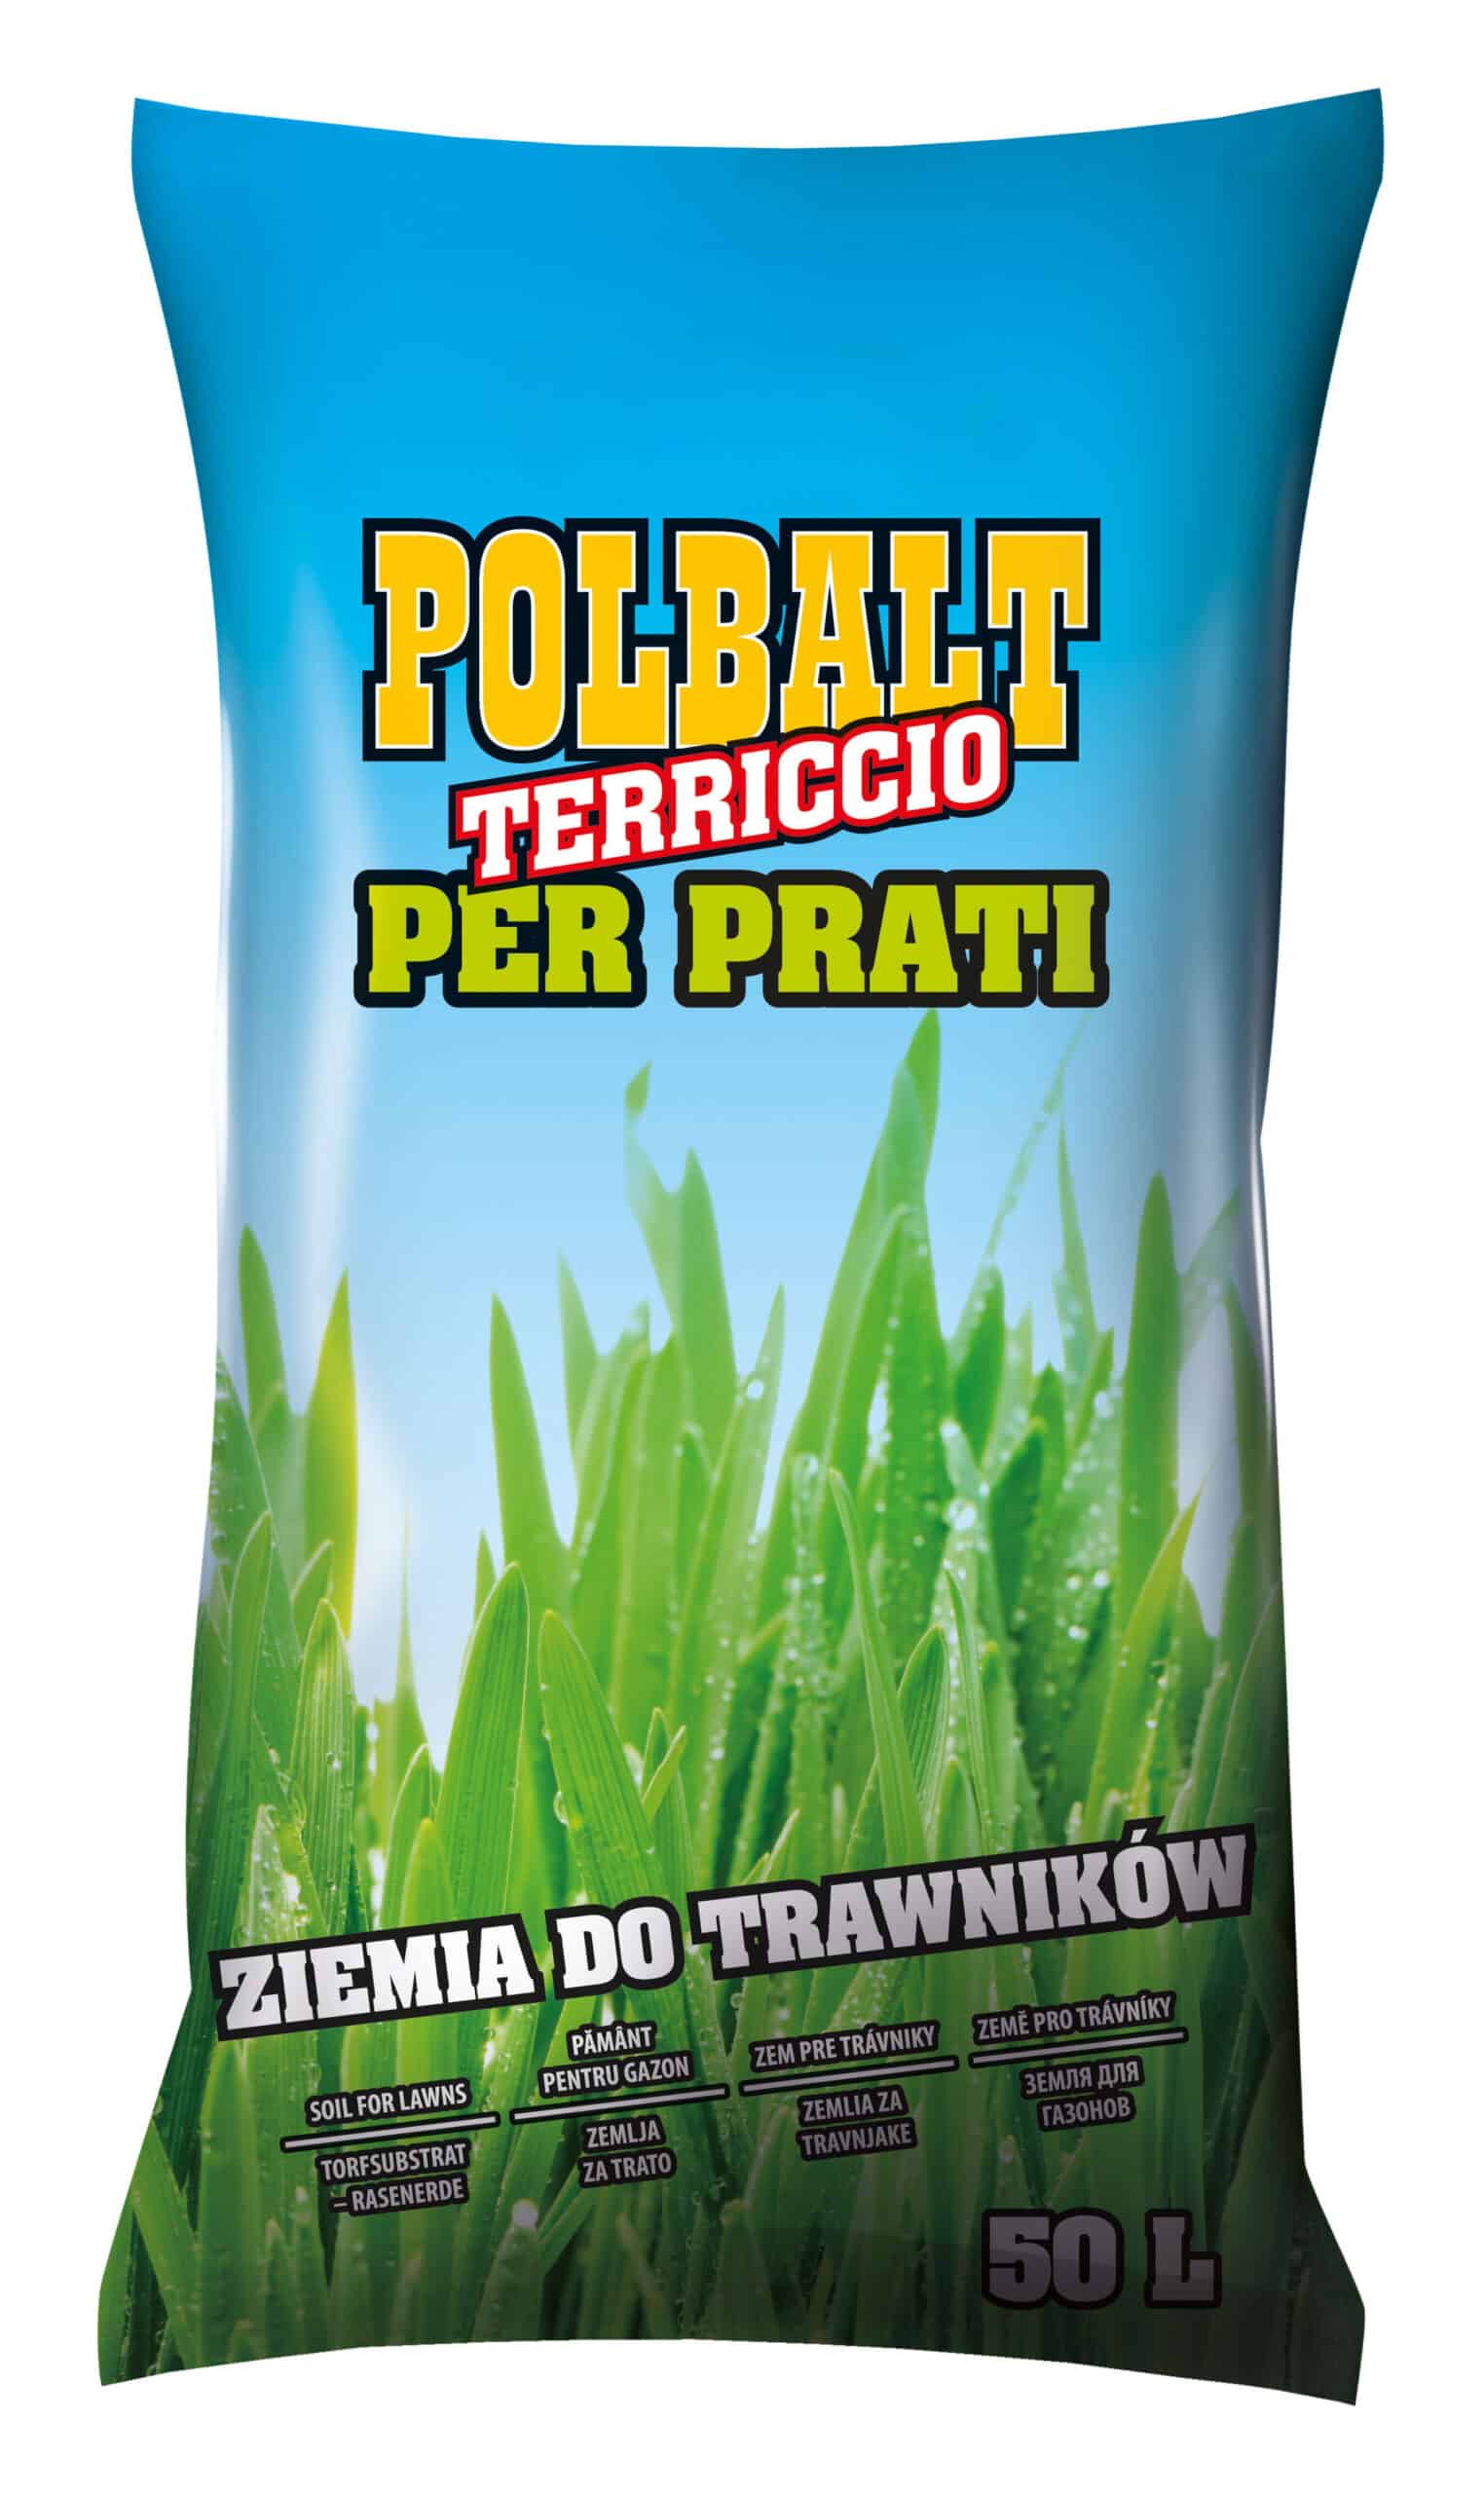 Polbalt soil for lawn